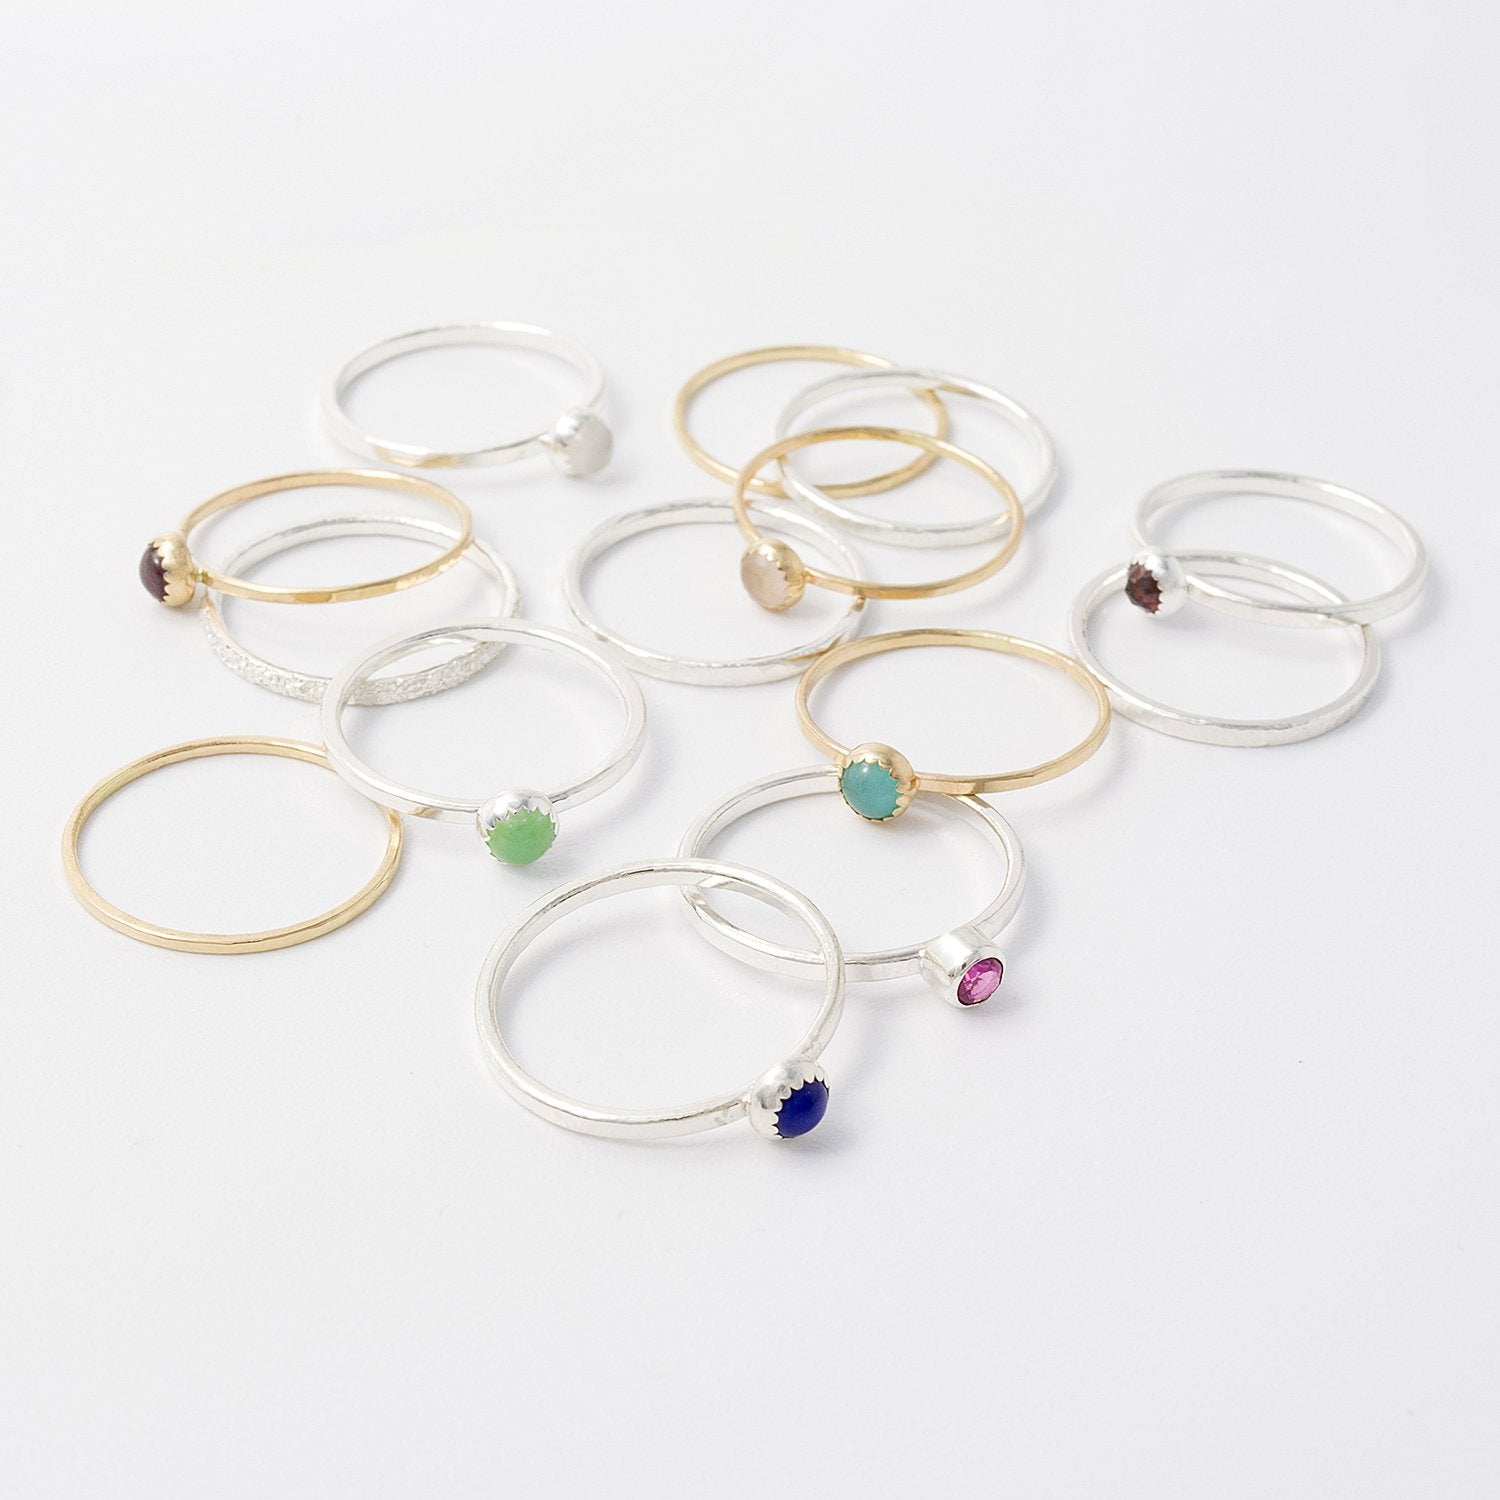 Silver stacking rings set - Simone Walsh Jewellery Australia